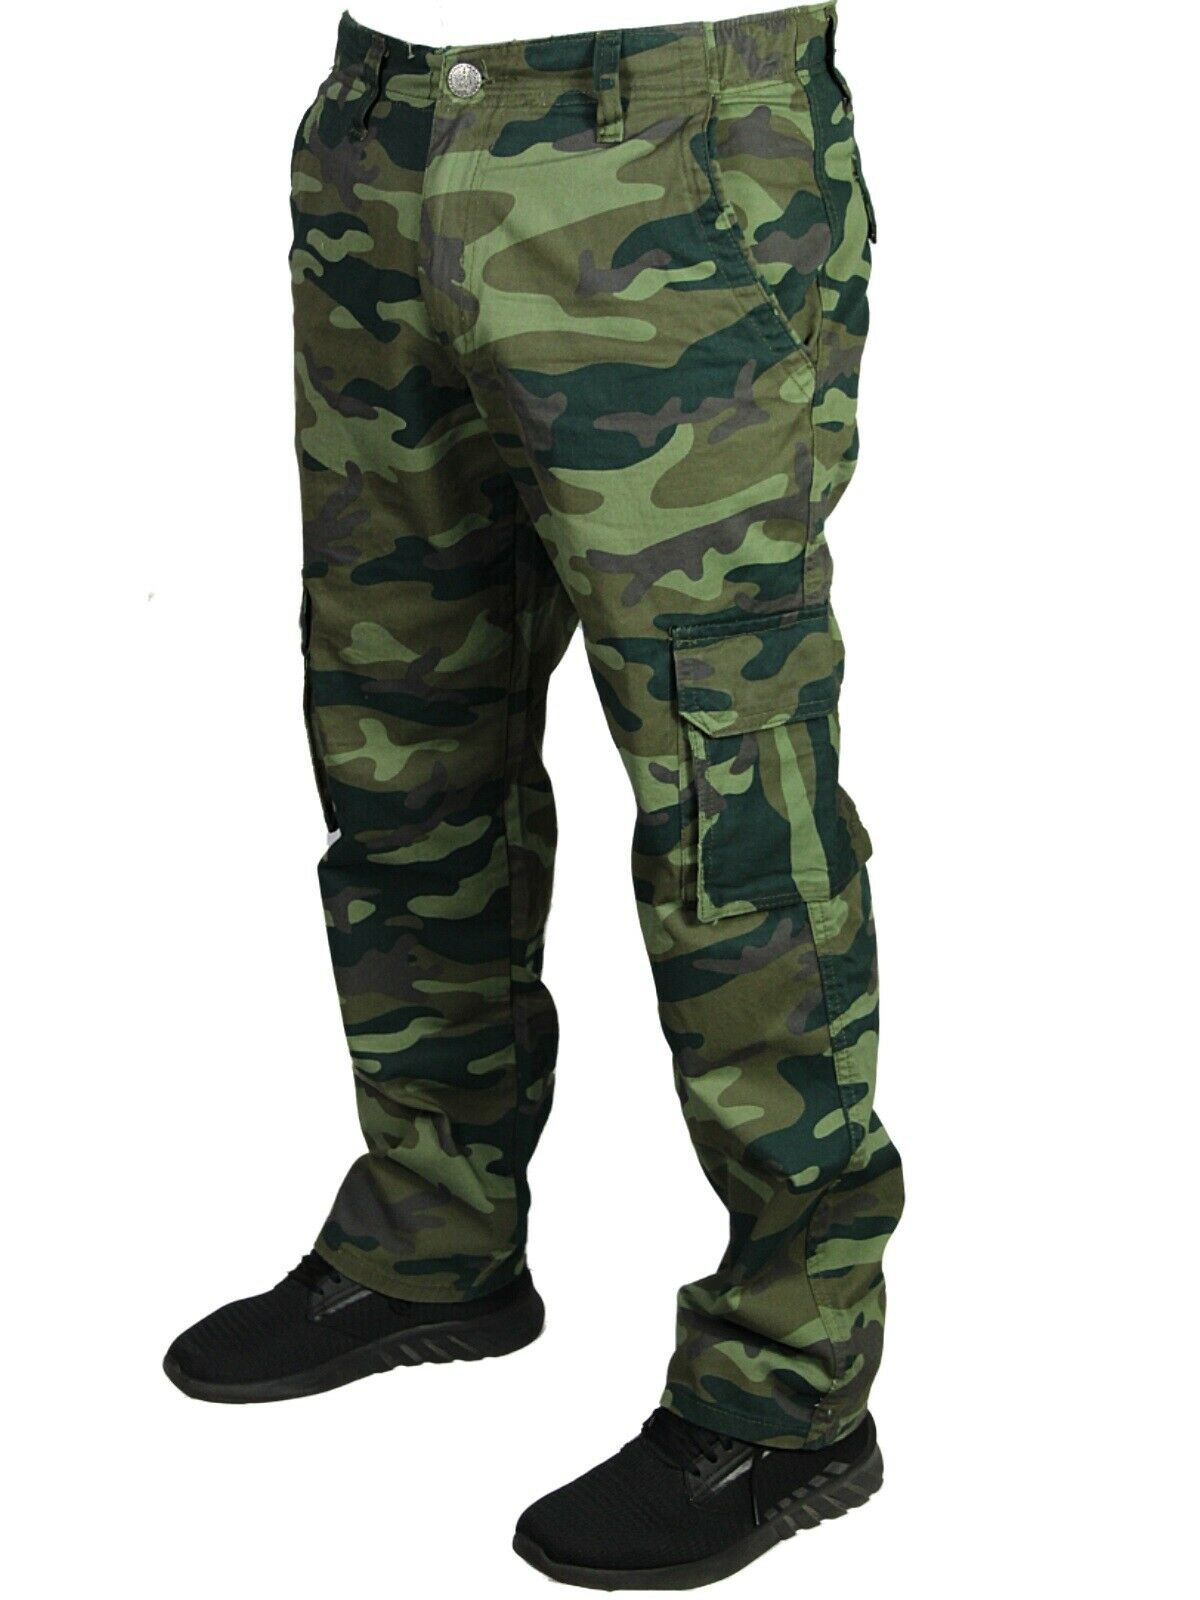 New KAM Mens Casual Camo Cargo Combat Pants Green Camouflage Waist 30 ...